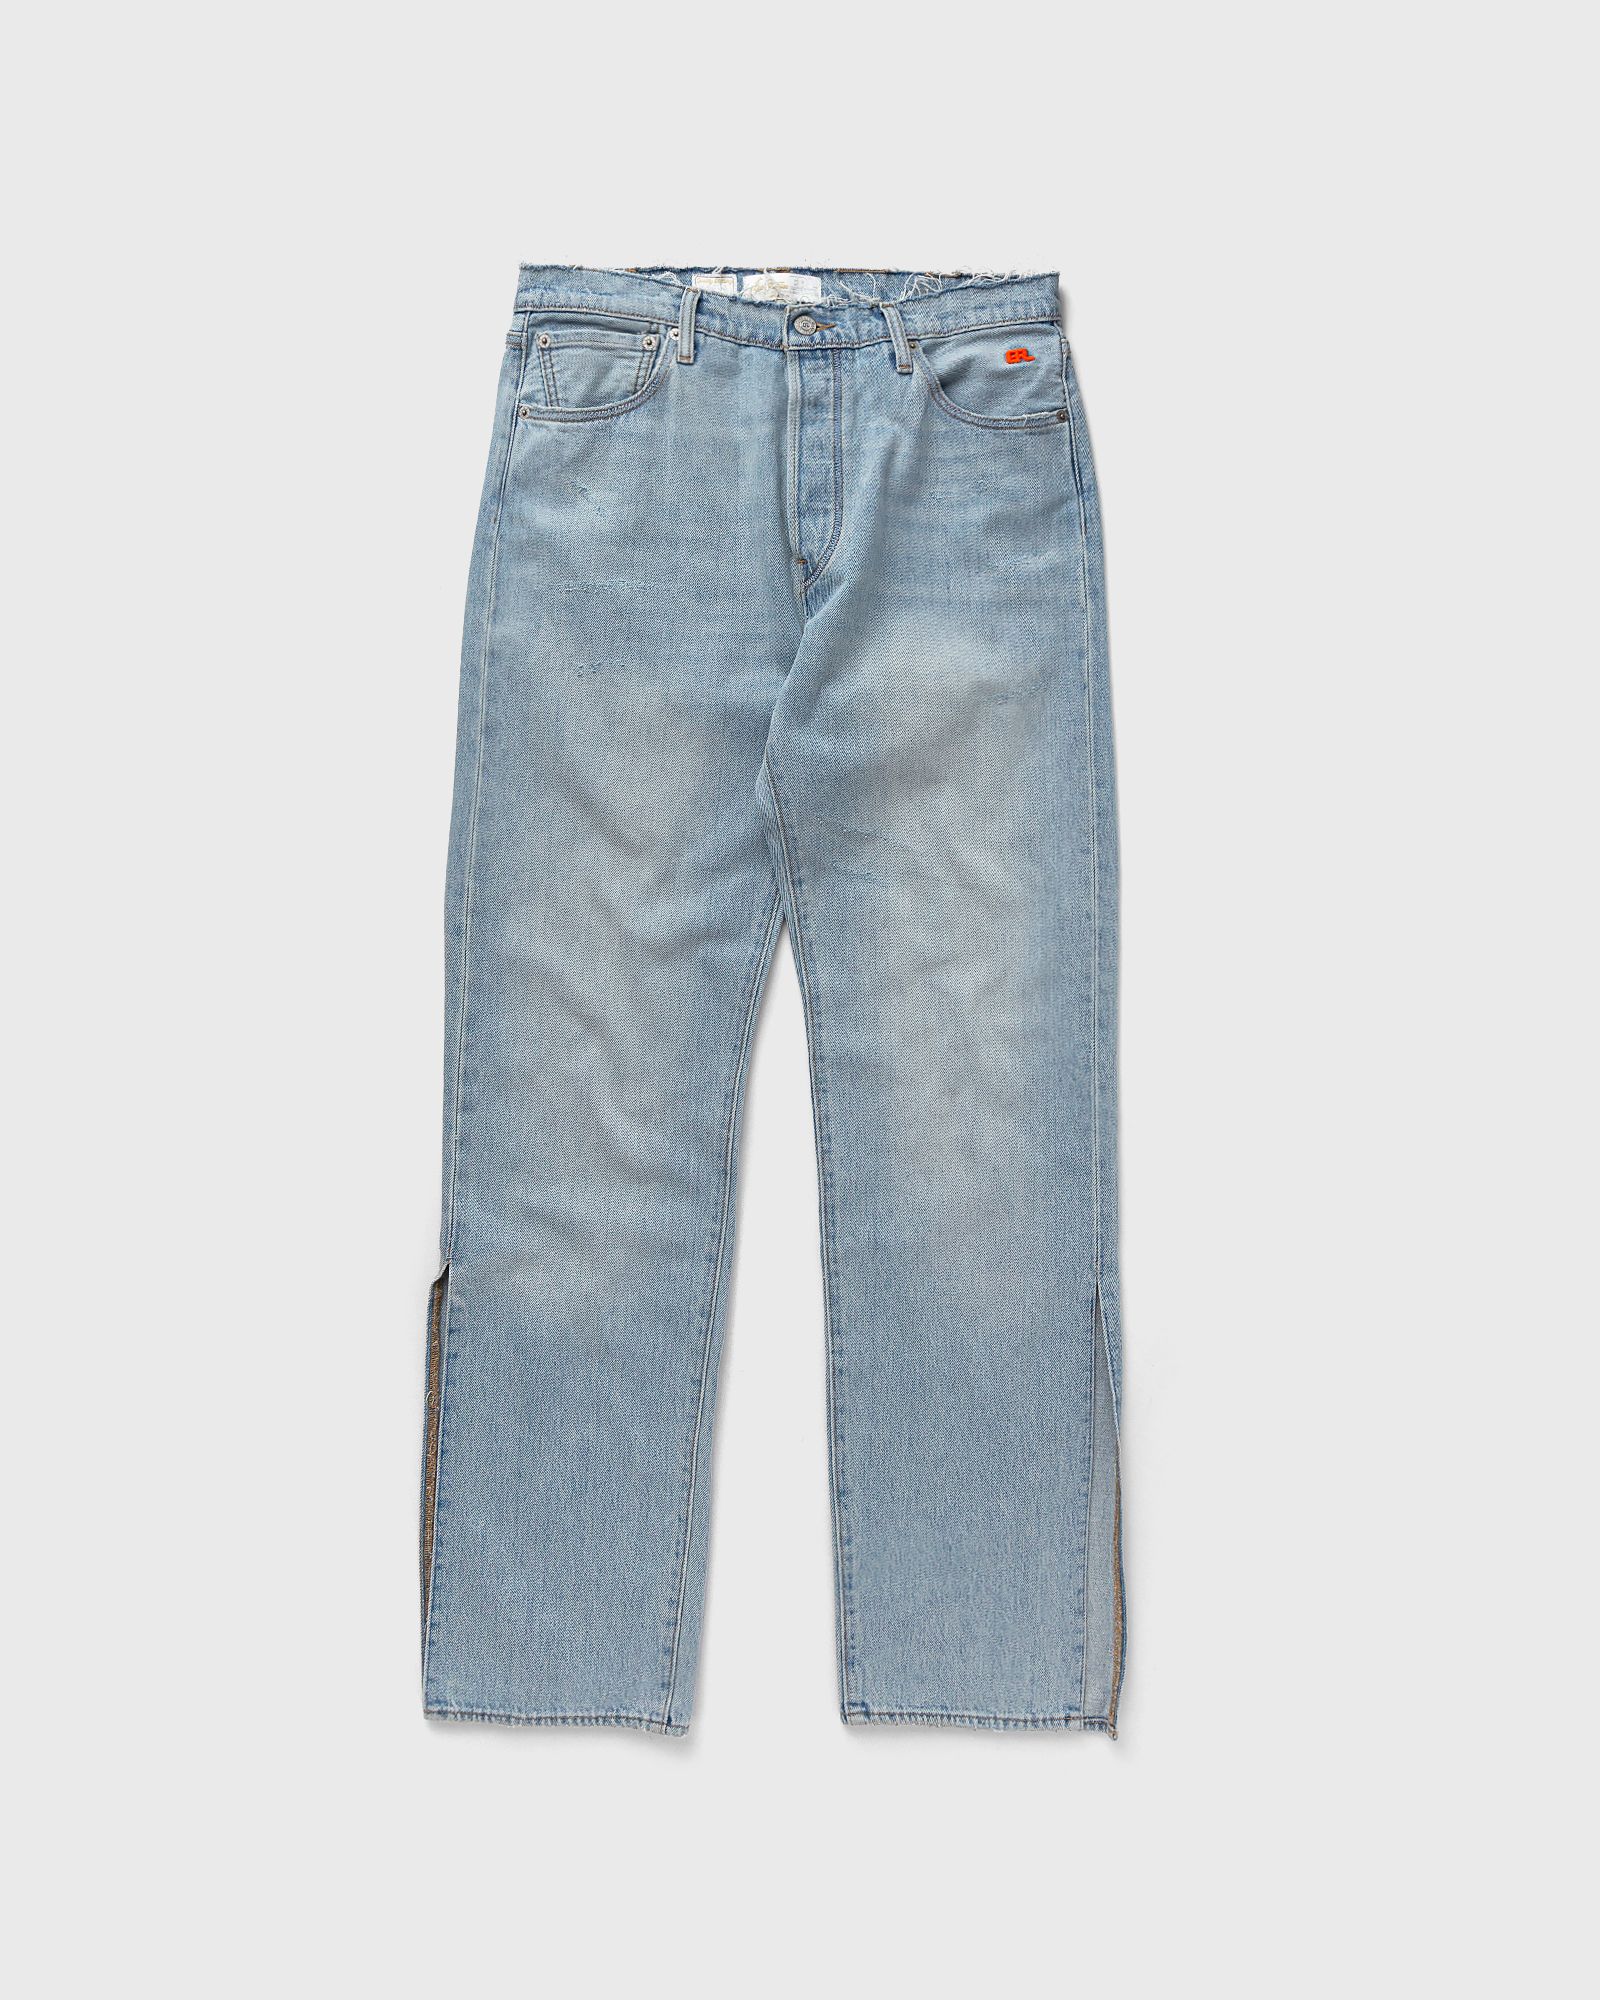 ERL - x levis 501 denim woven men jeans blue in größe:l